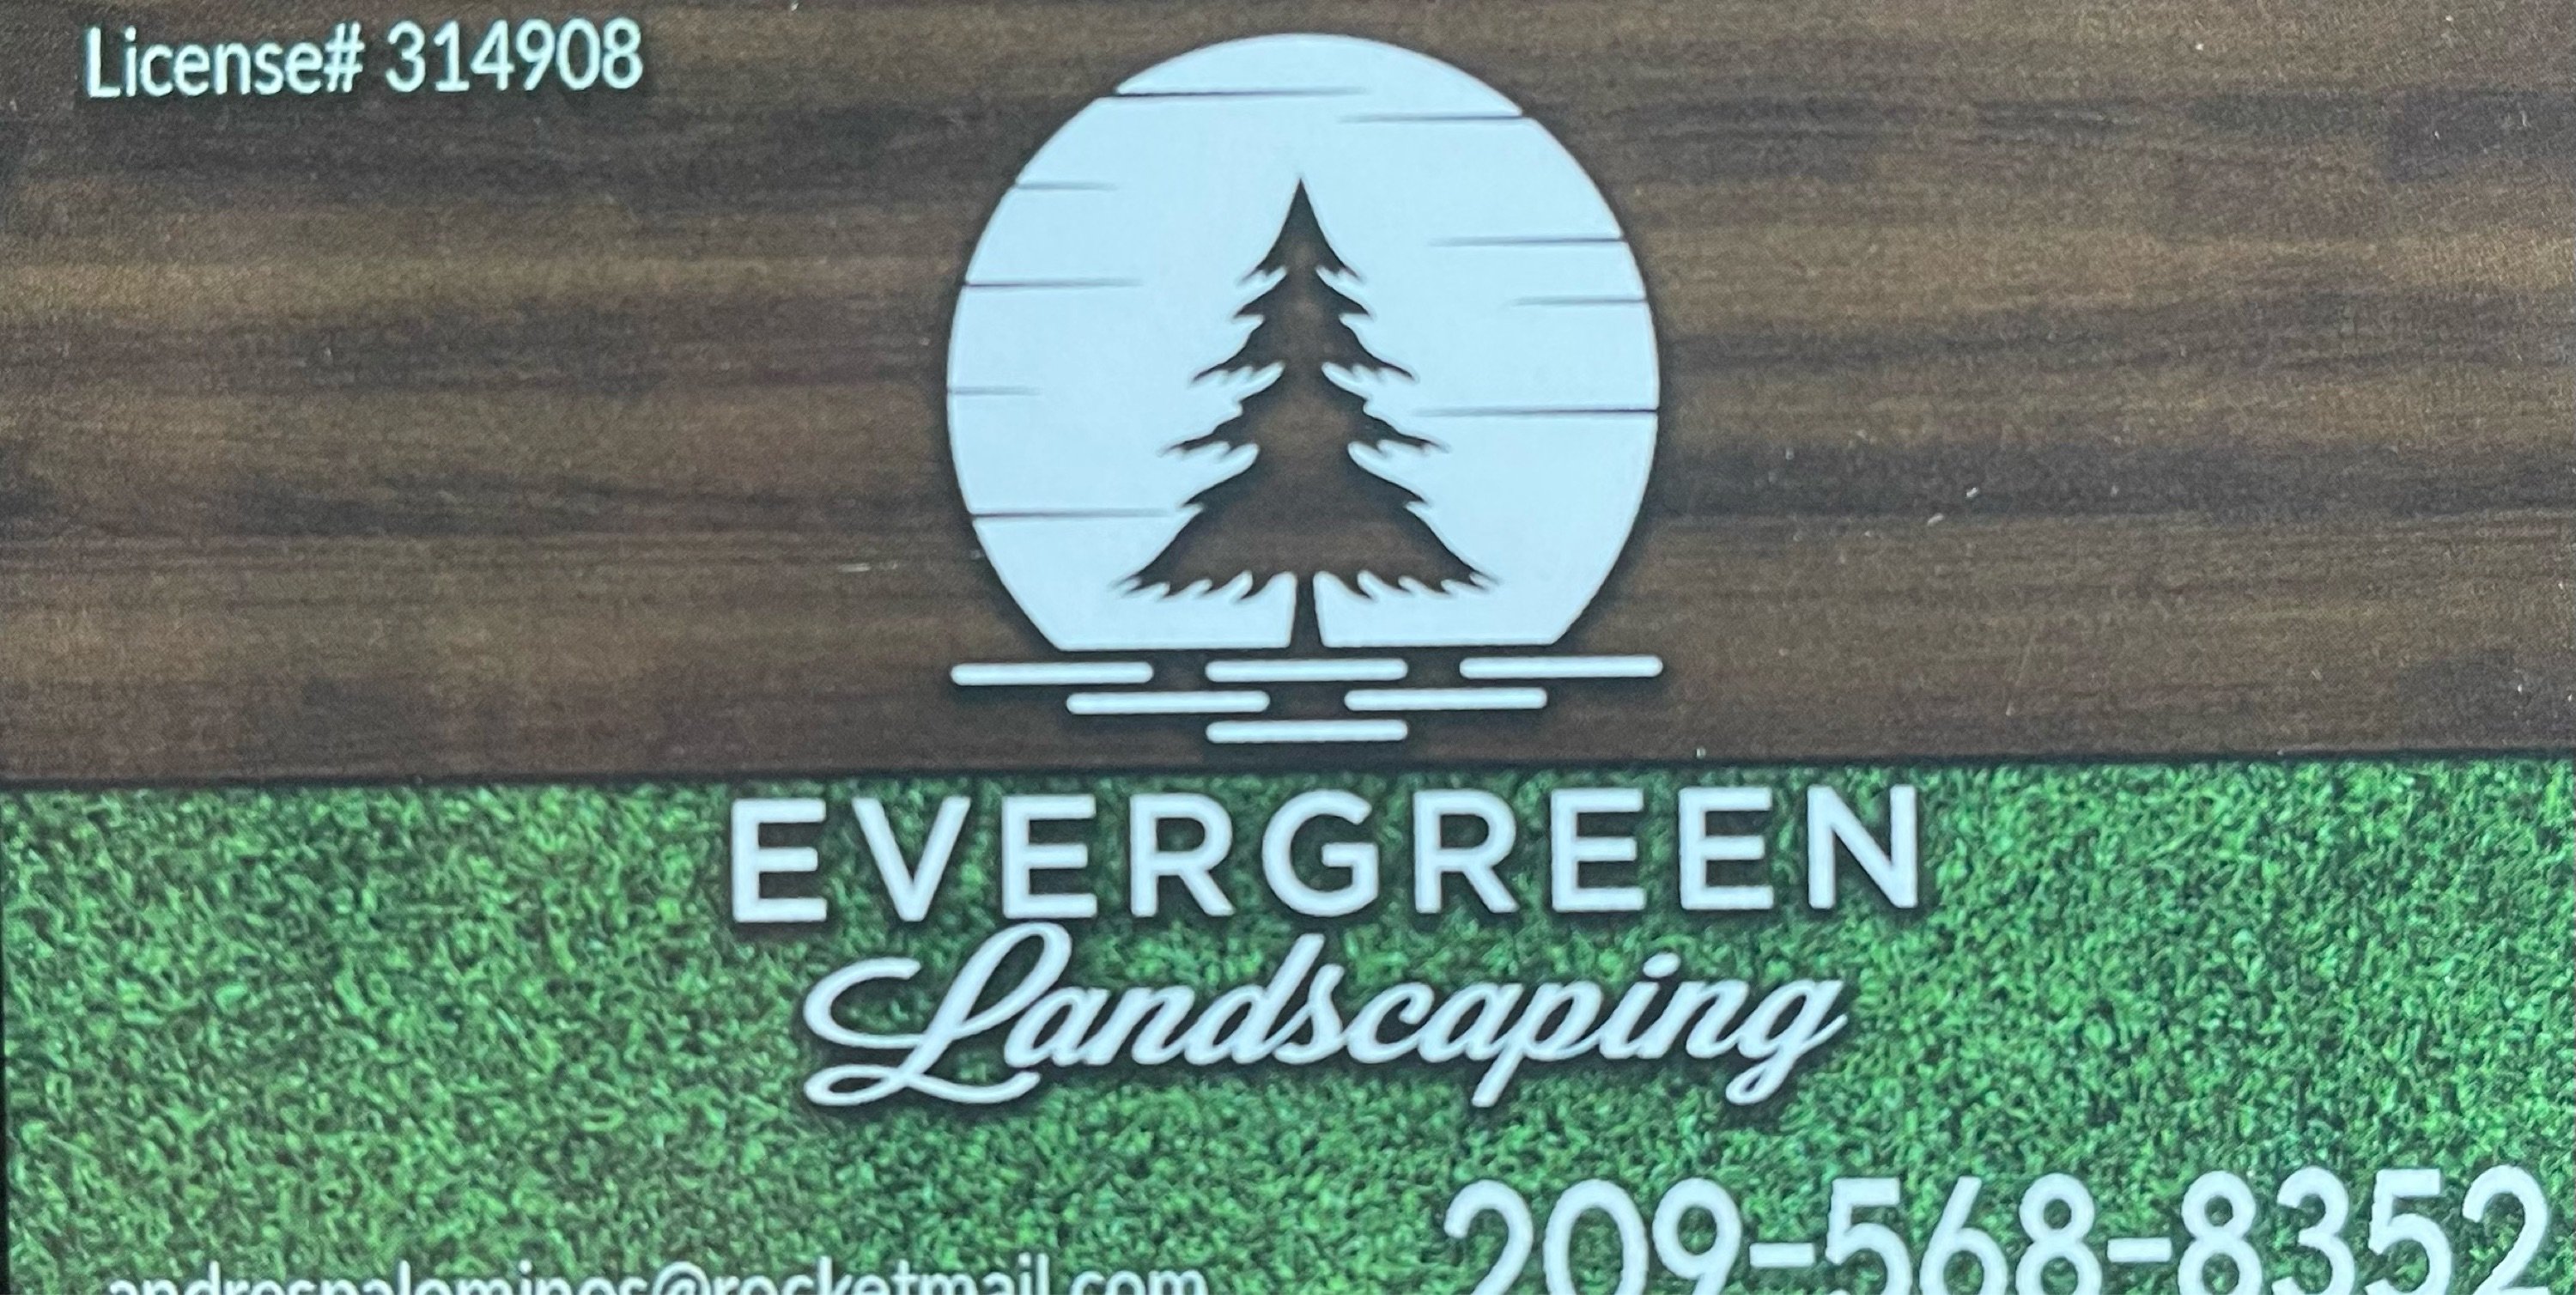 Evergreen Landscaping - Unlicensed Contractor Logo